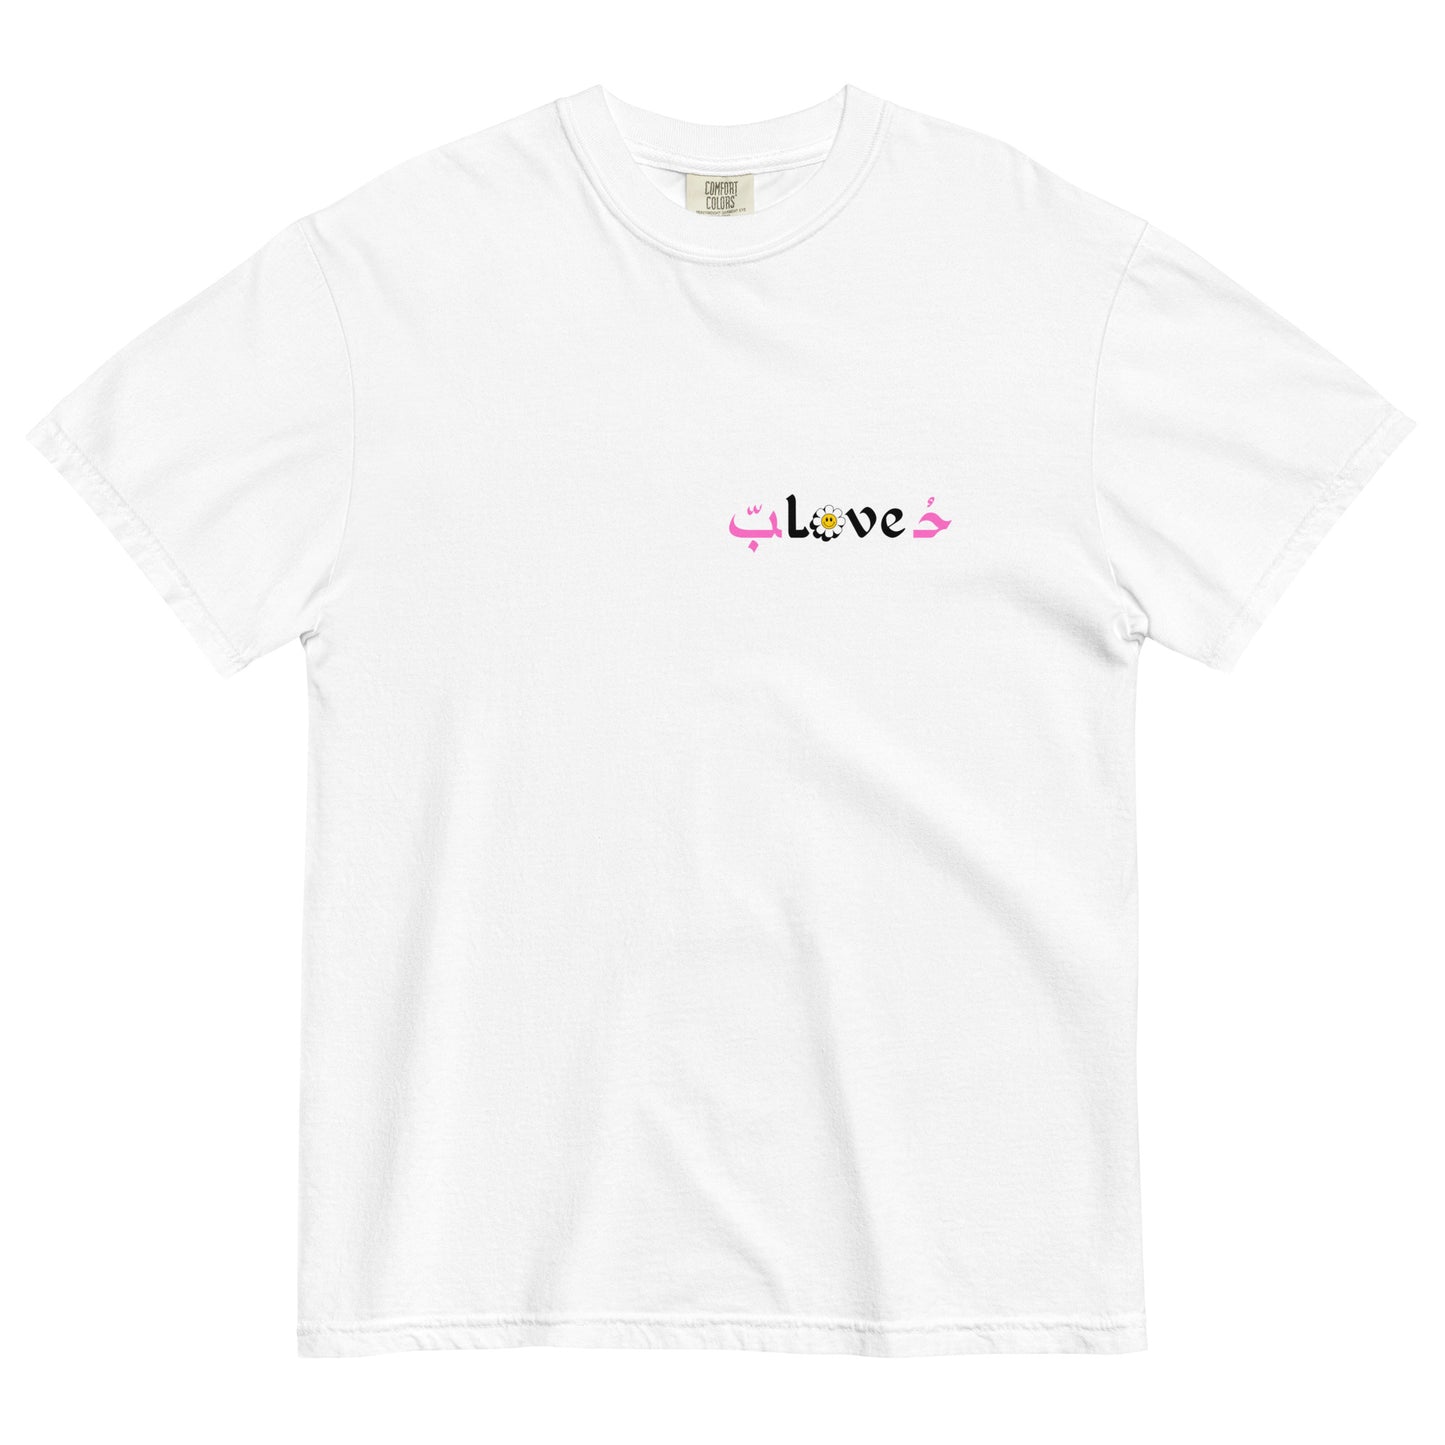 Hobb: "Love" (حب) – Unisex Heavyweight T-shirt